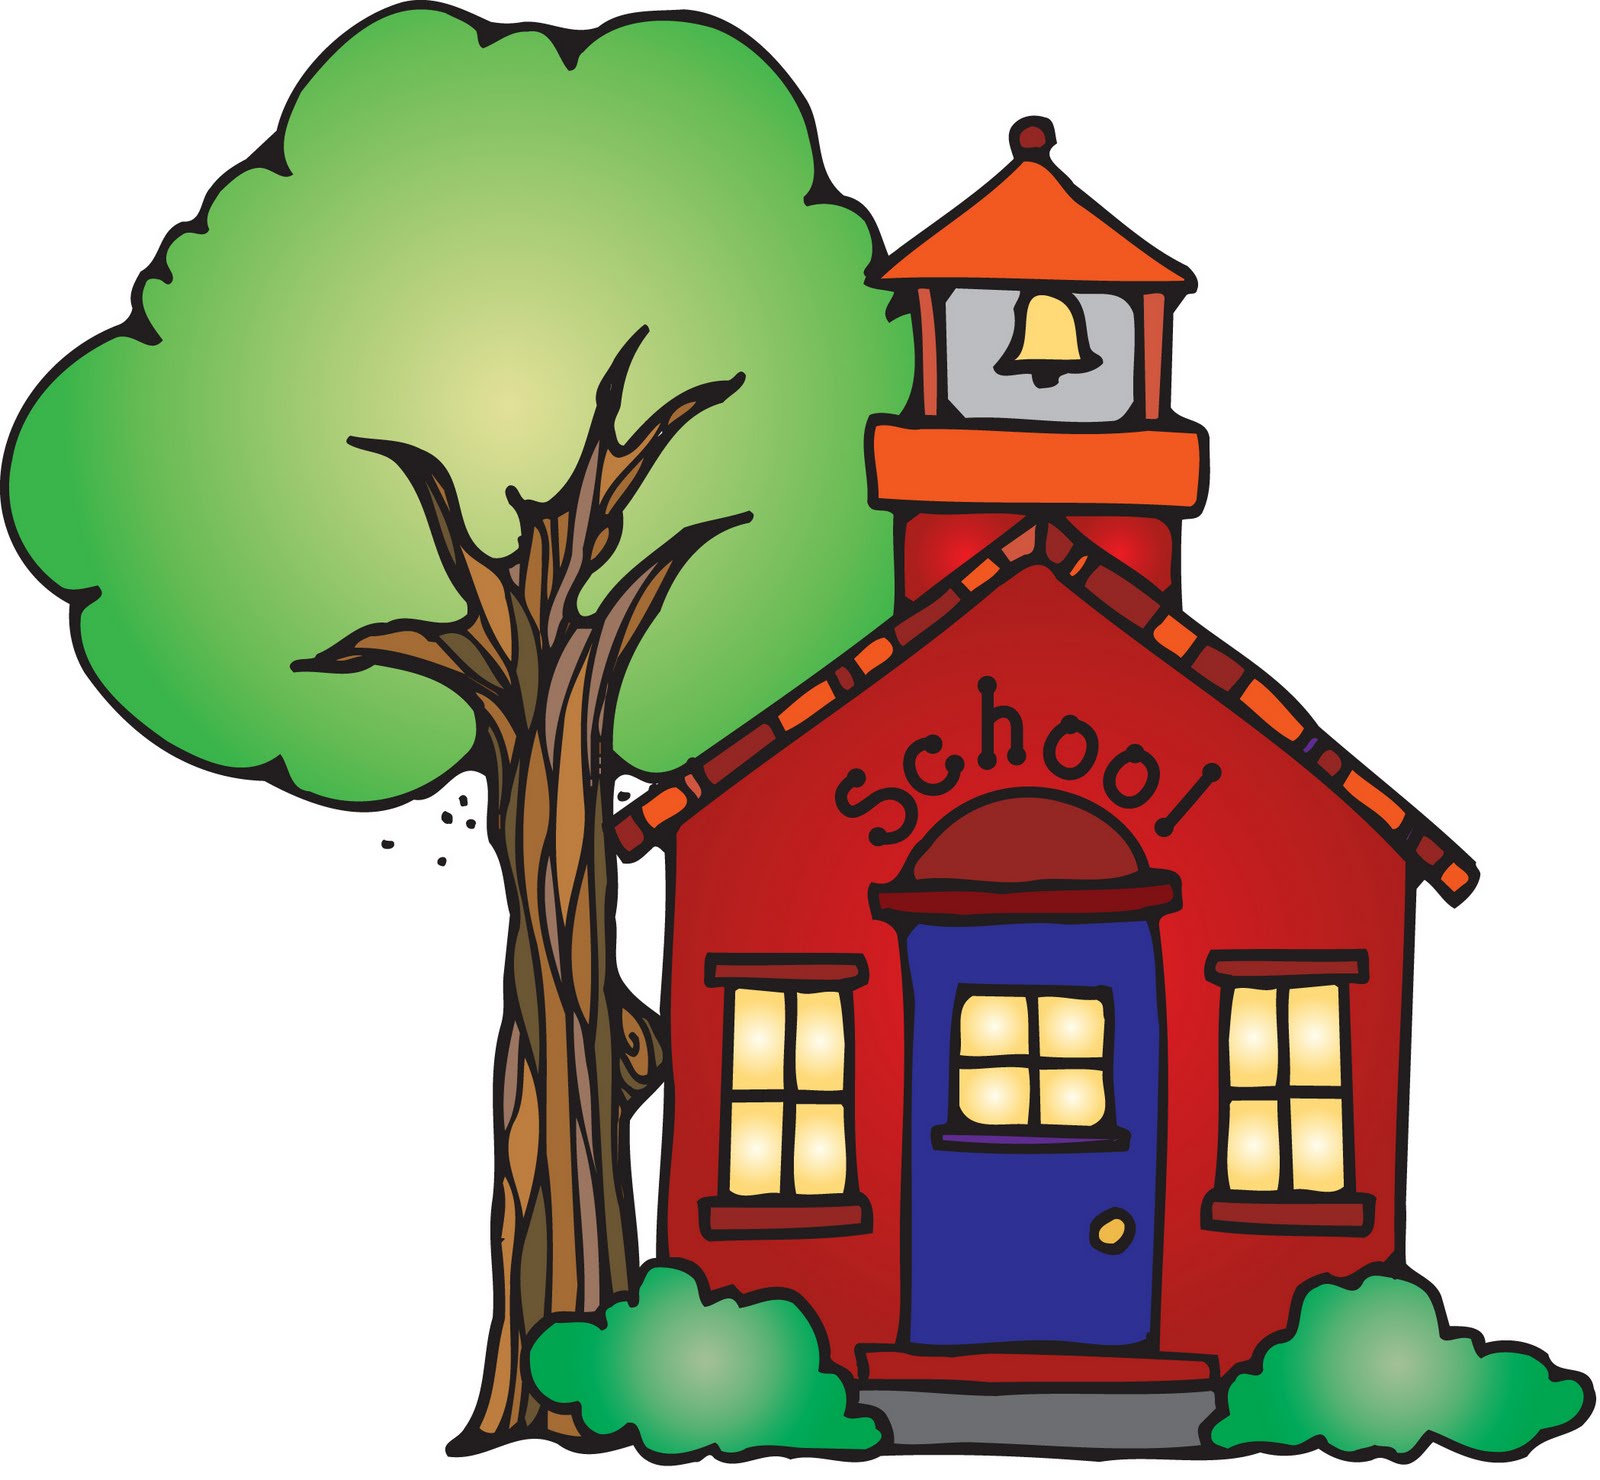 School House Graphics | Free Download Clip Art | Free Clip Art ...